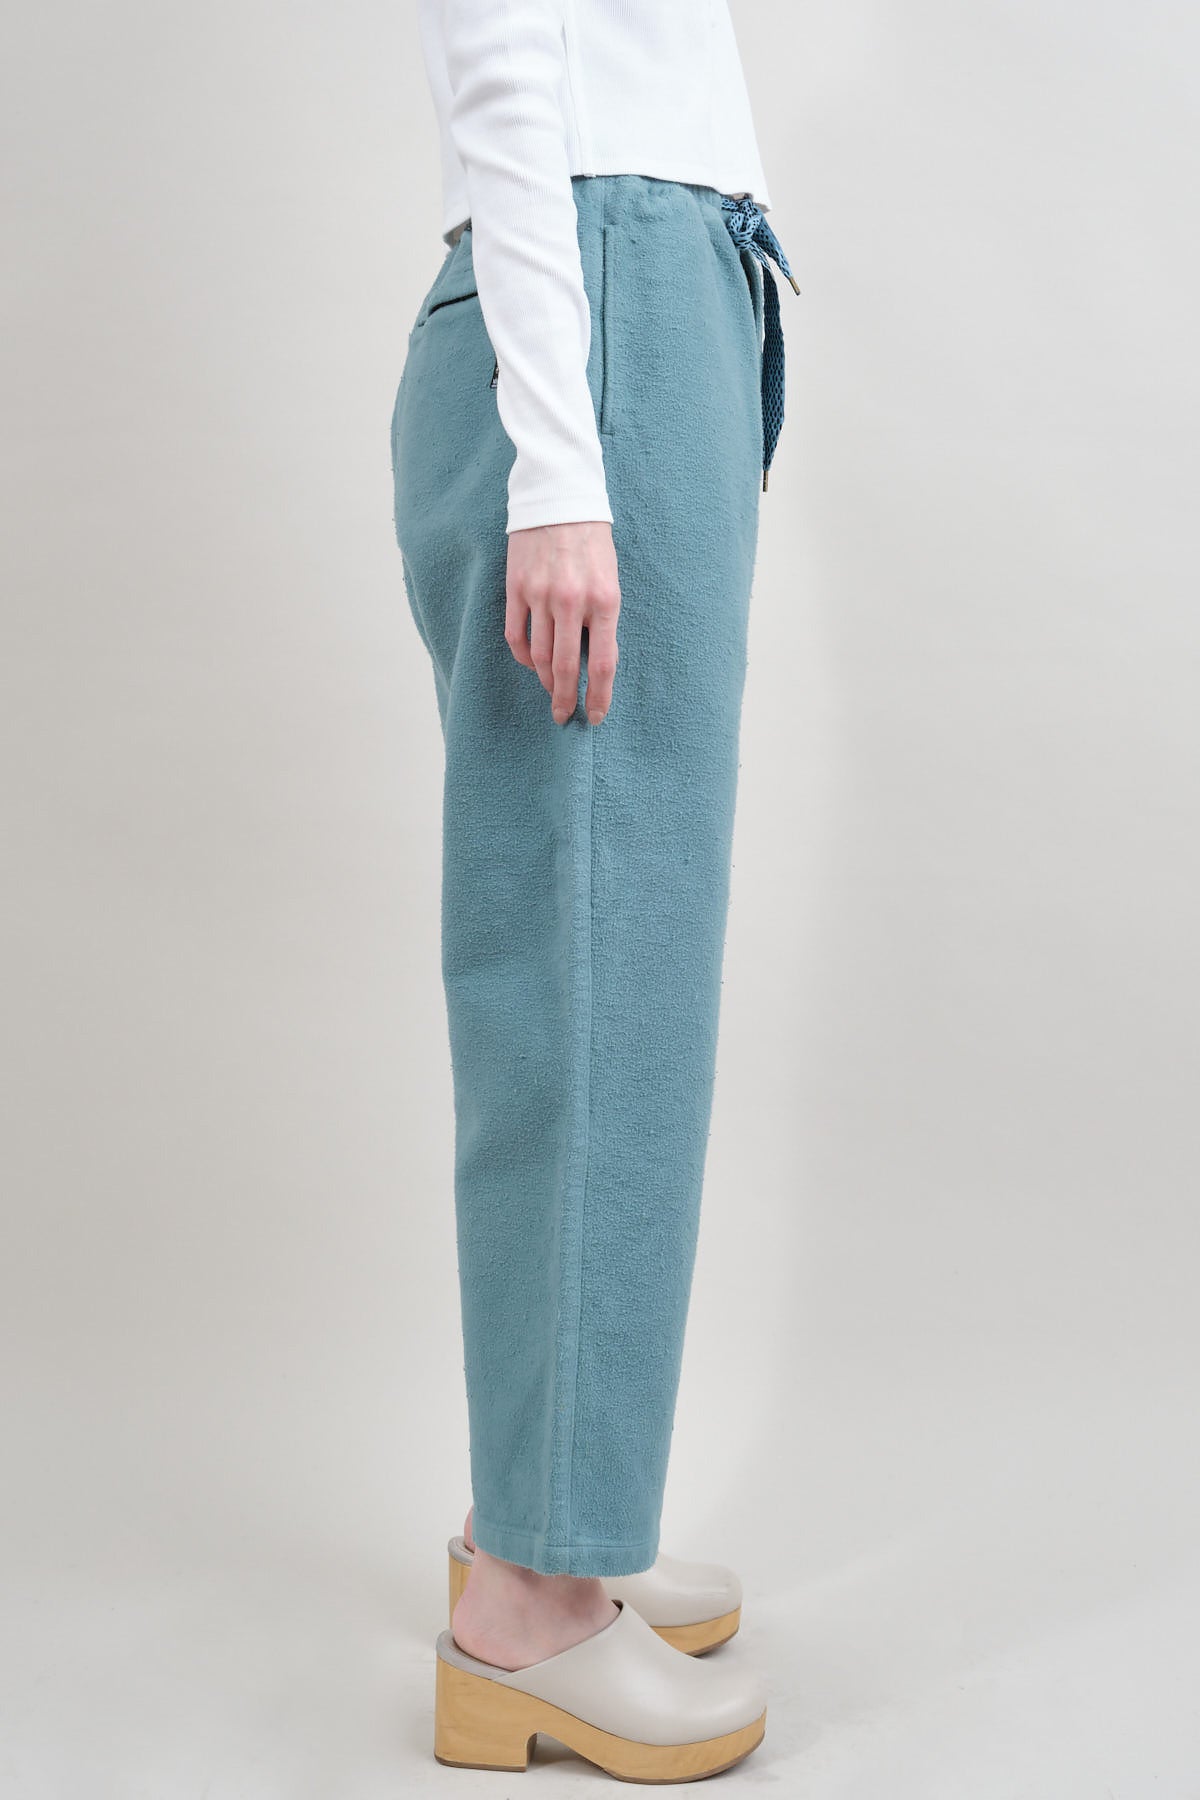 Kapital Napped Heat-Corduroy Easy Pants in Turquoise